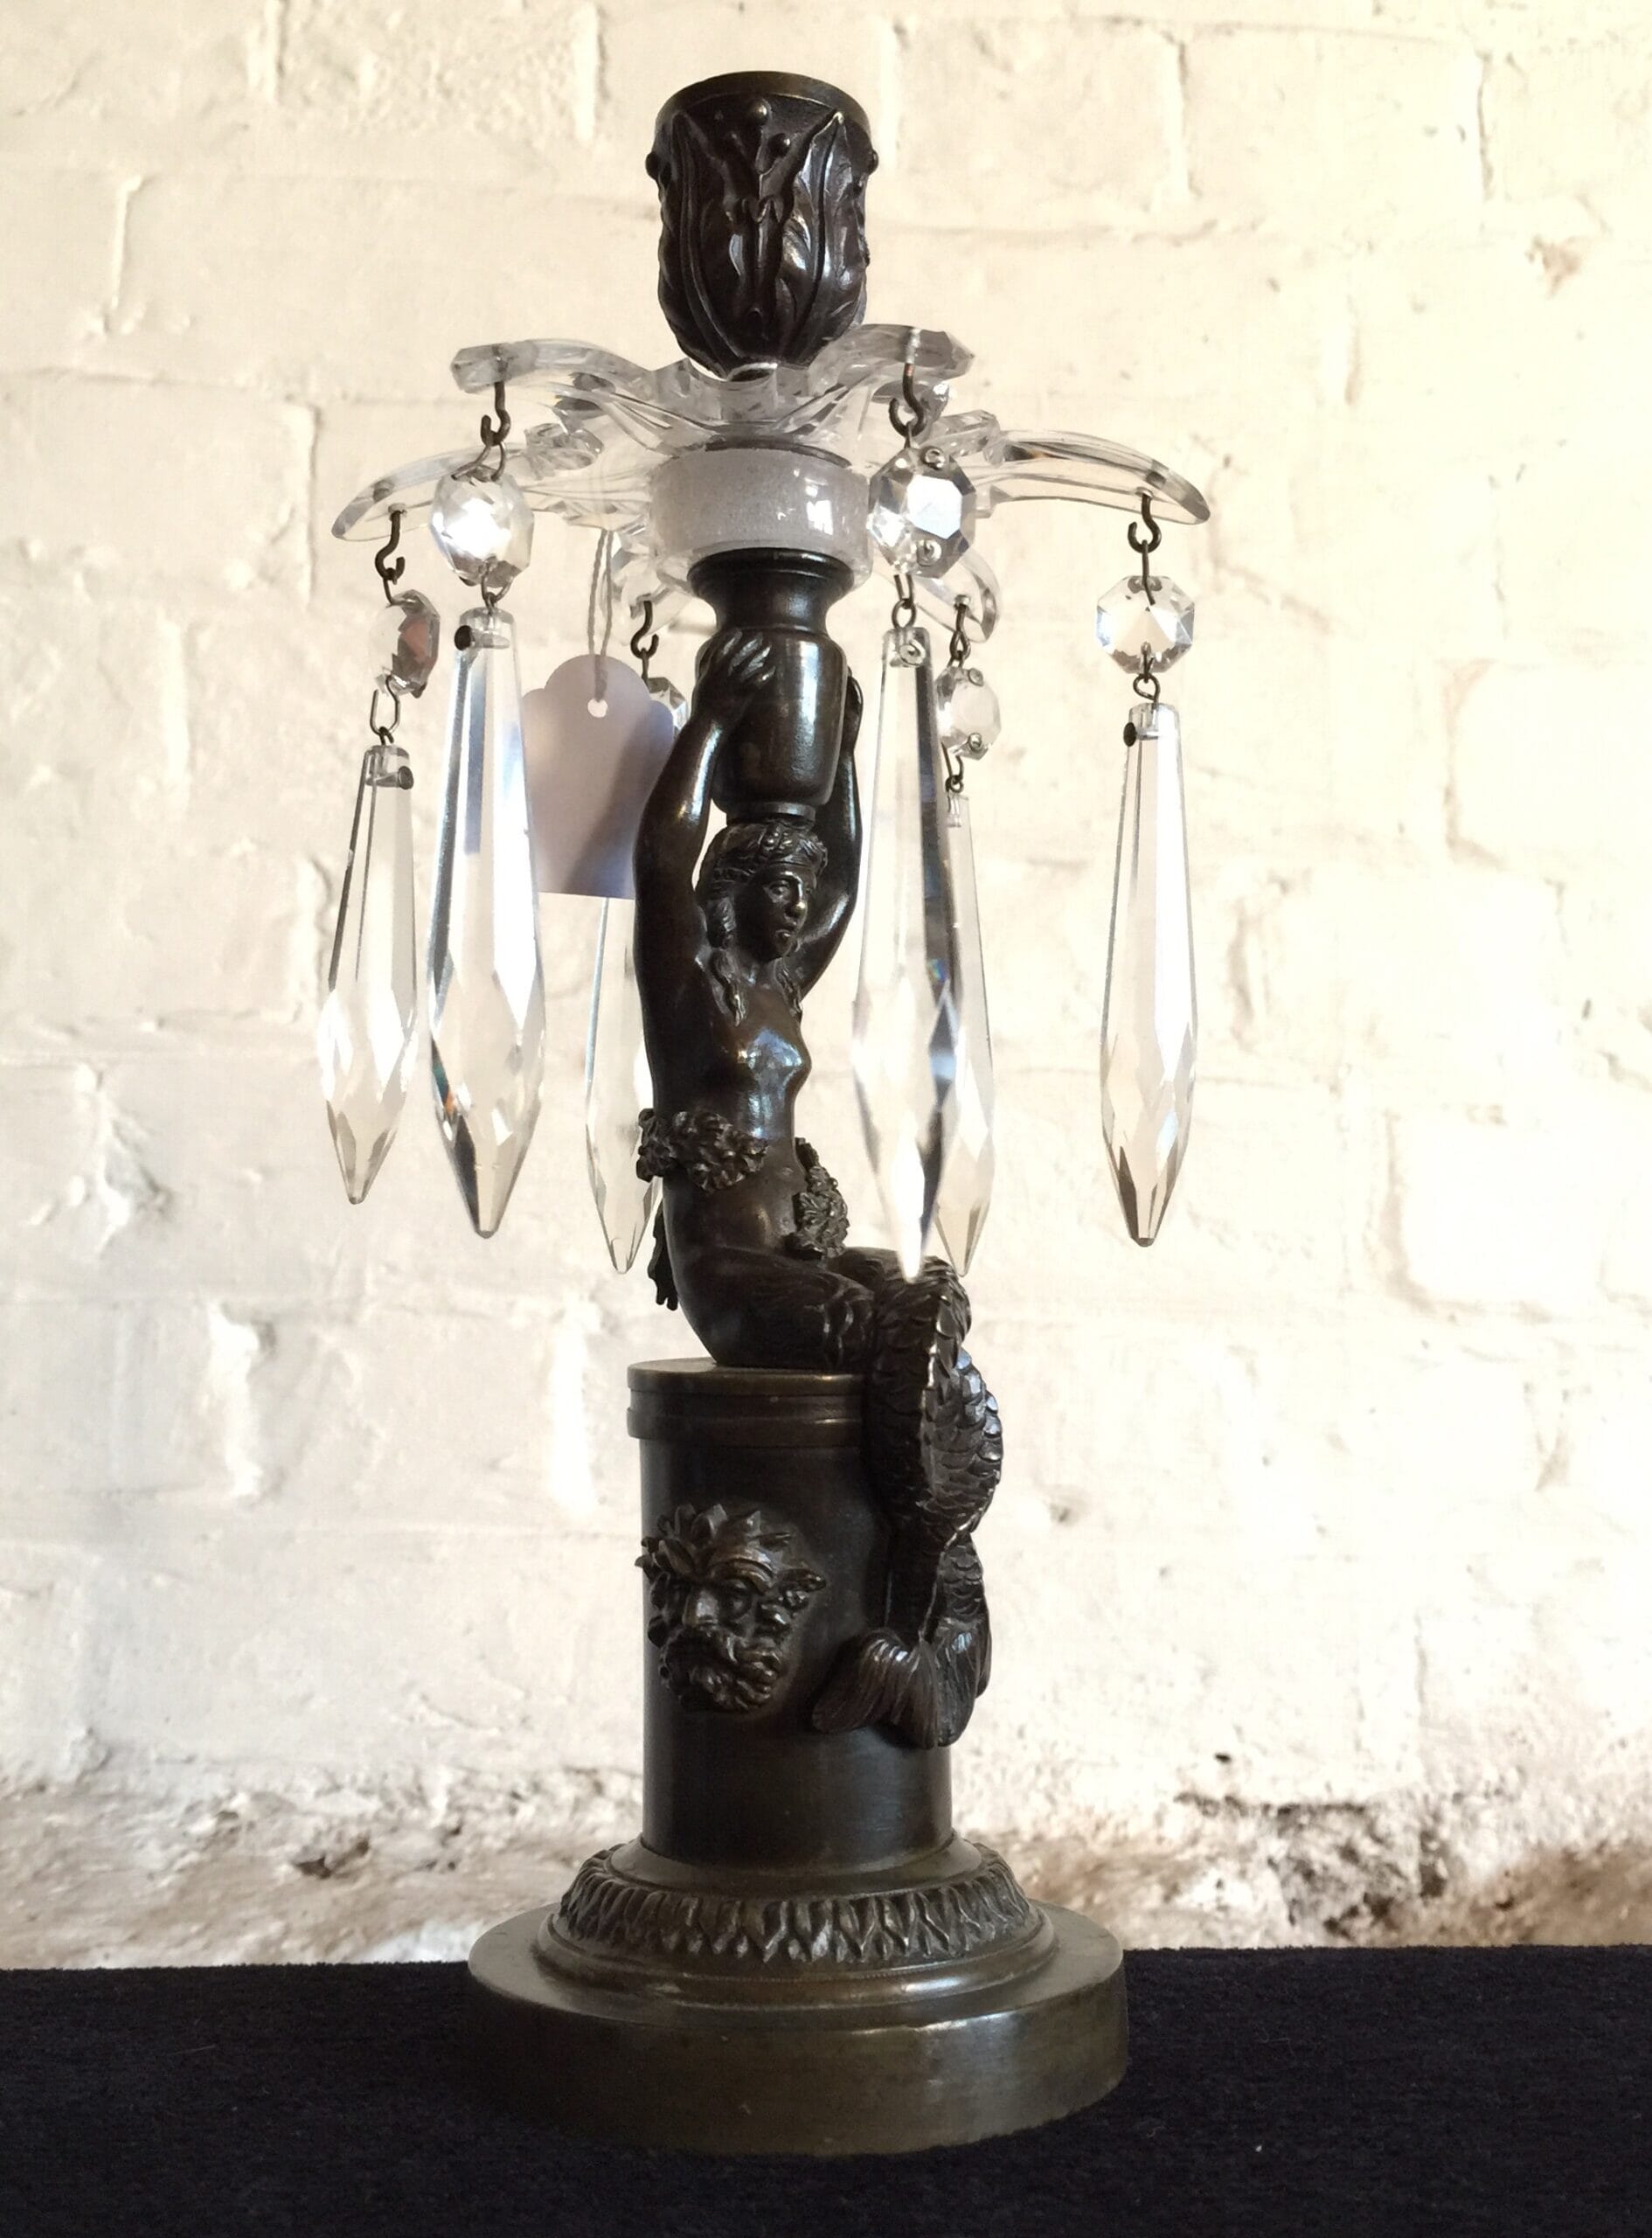 Regency bronze & glass candlestick, 'Mermaid', C.1820.-0